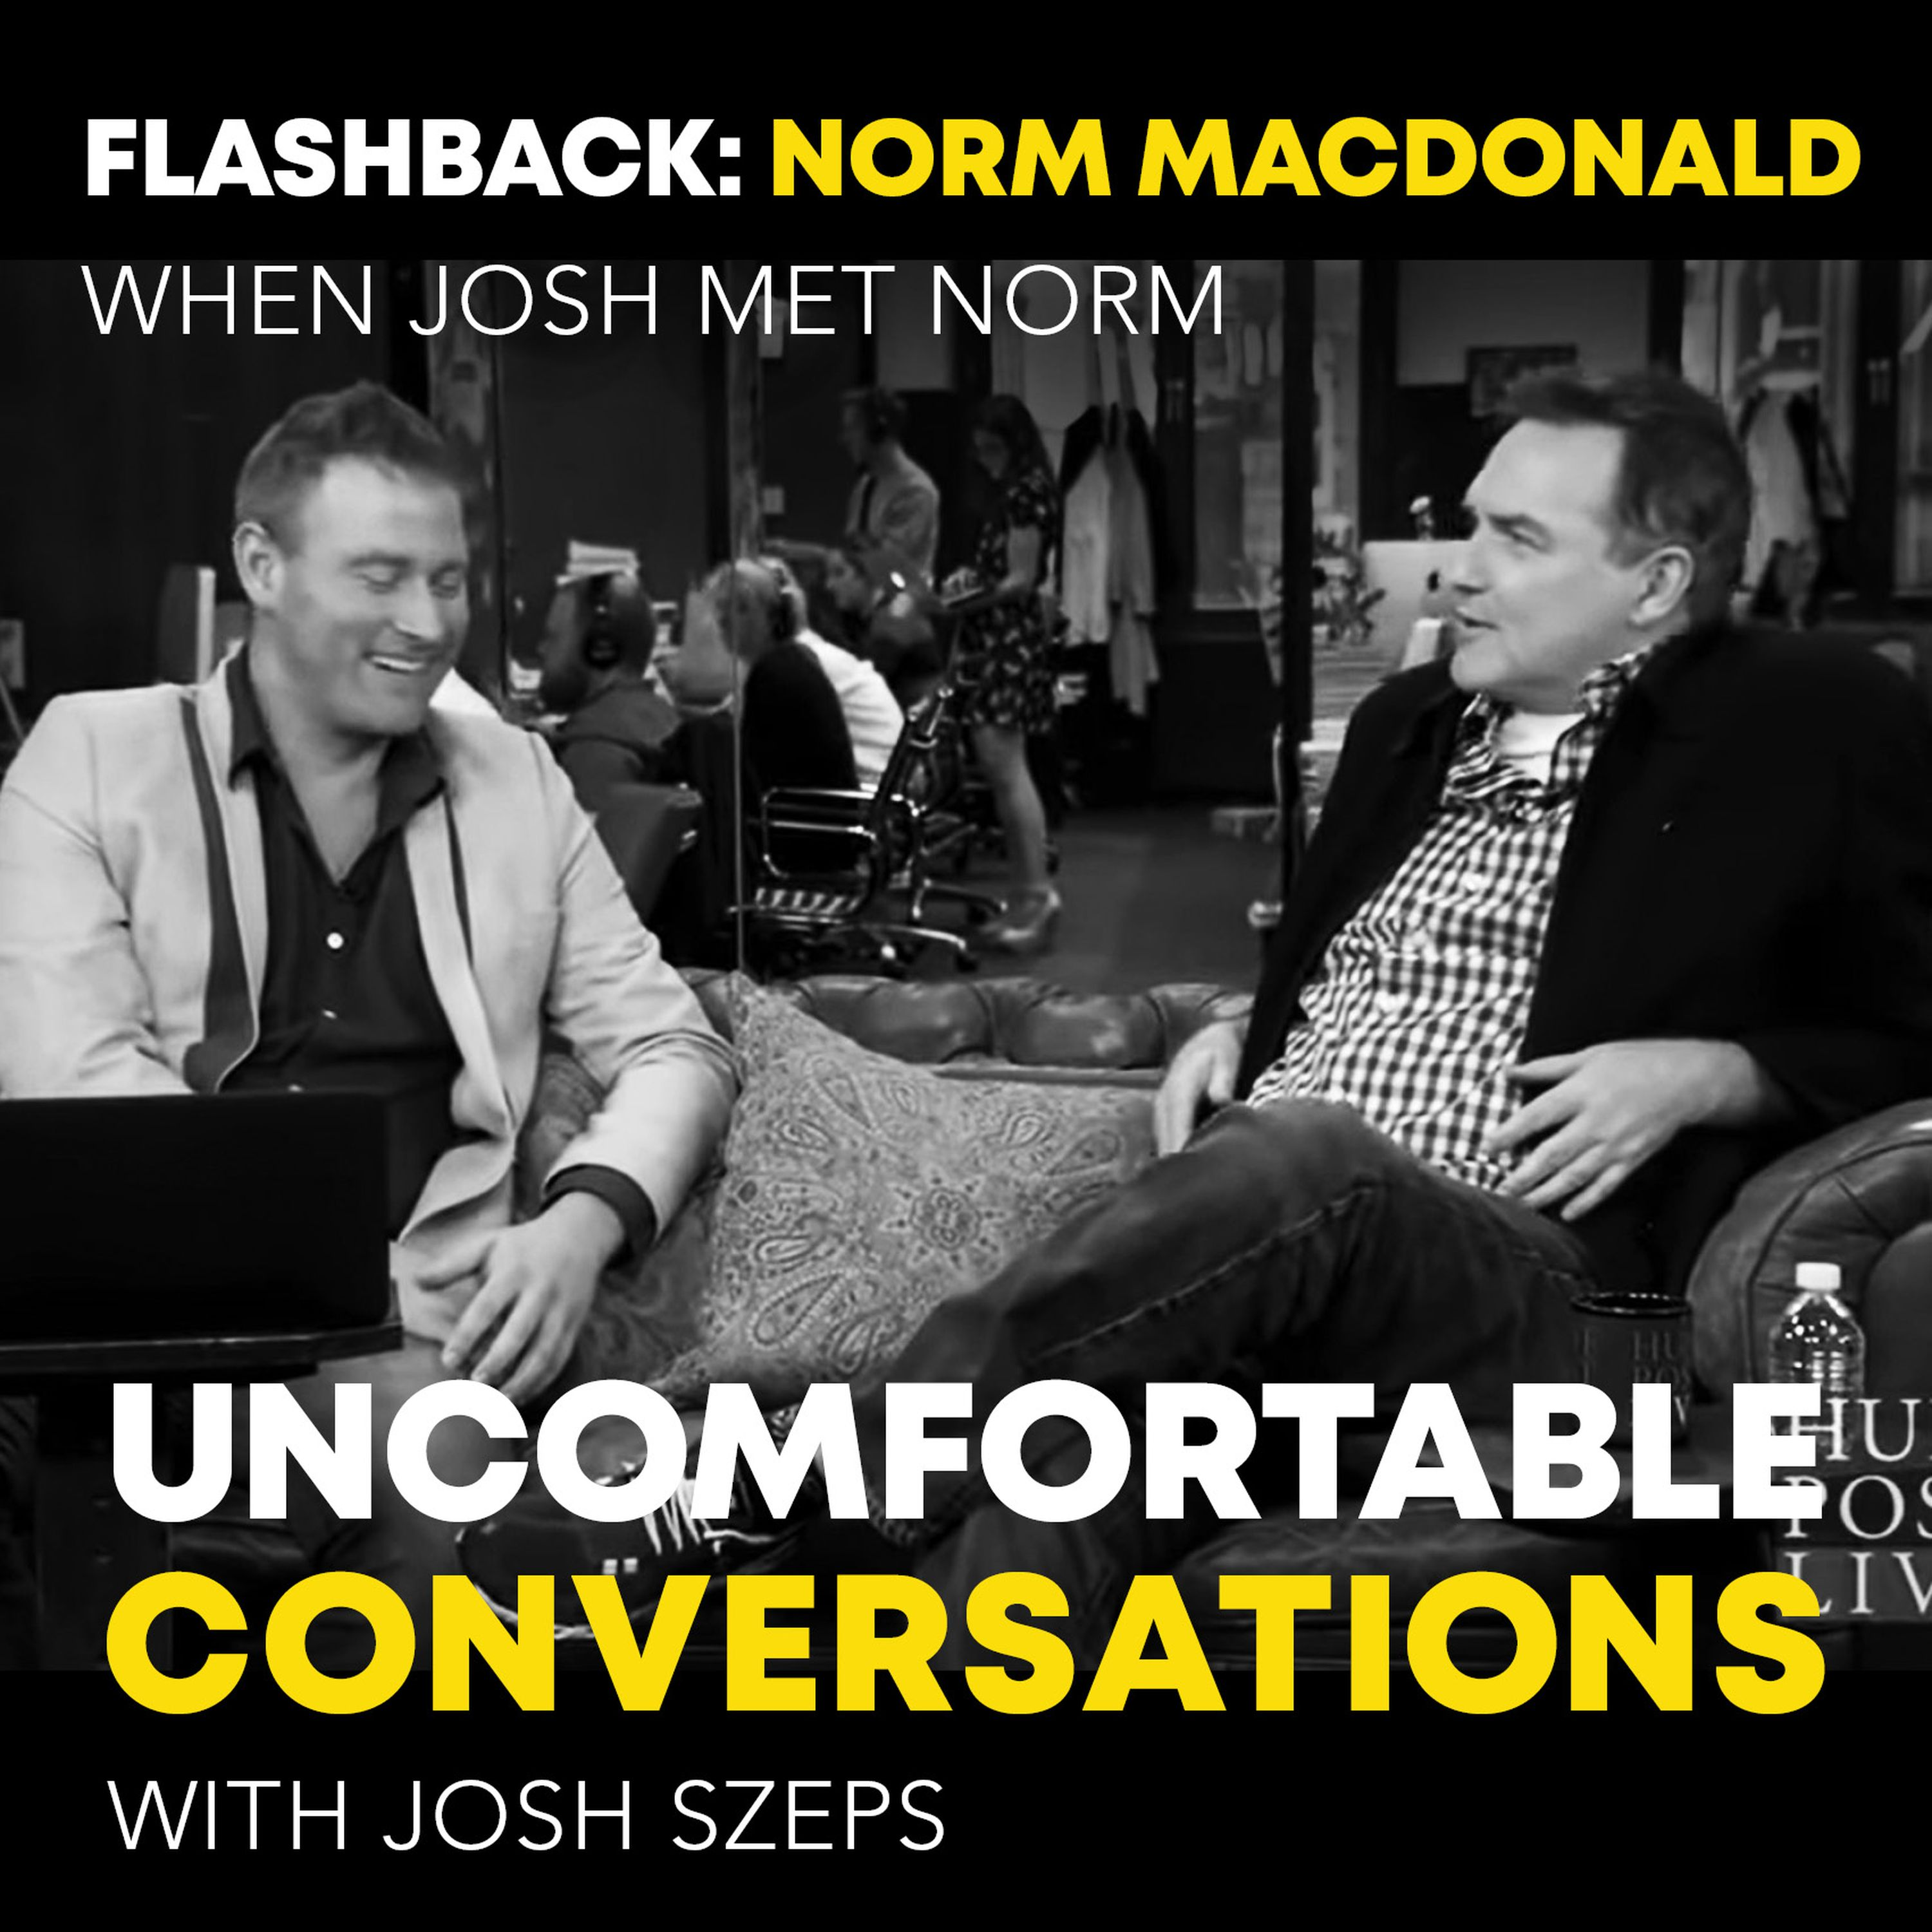 Flashback: Norm Macdonald